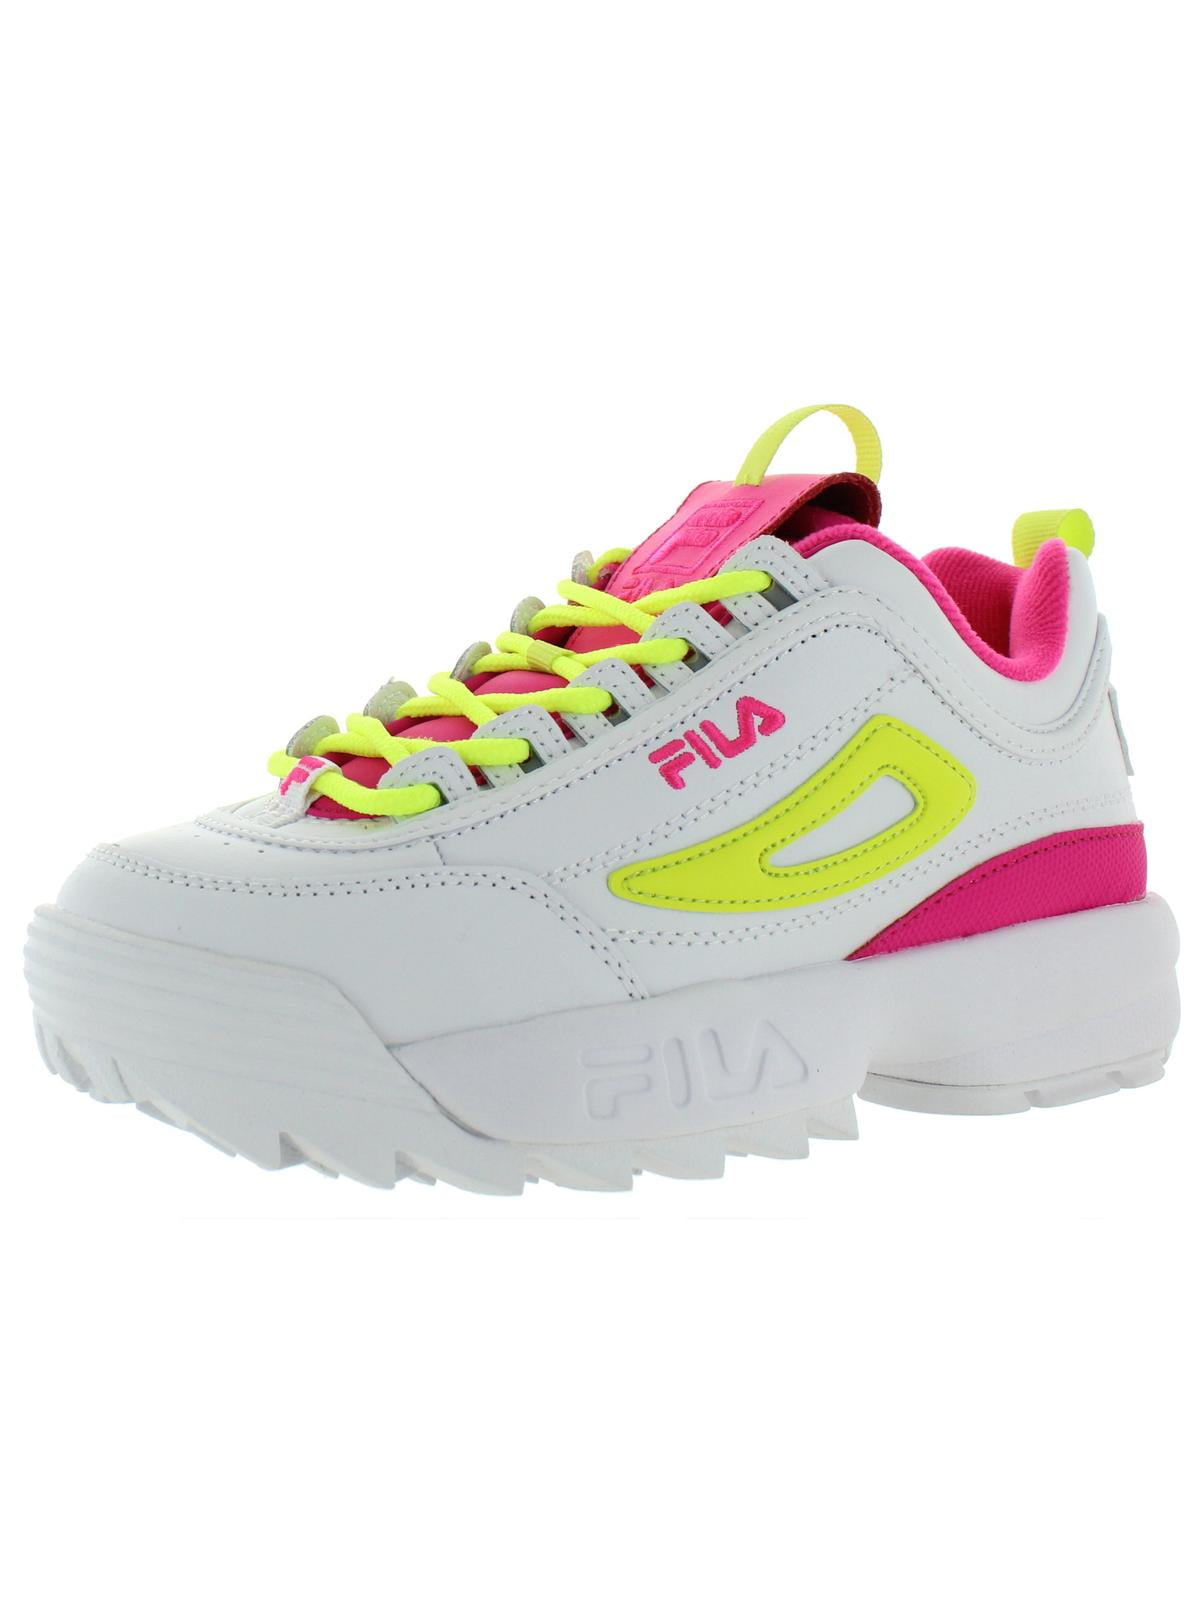 FILA - Fila Womens Disruptor Premium Workout Fitness Running Shoes - Walmart.com - Walmart.com